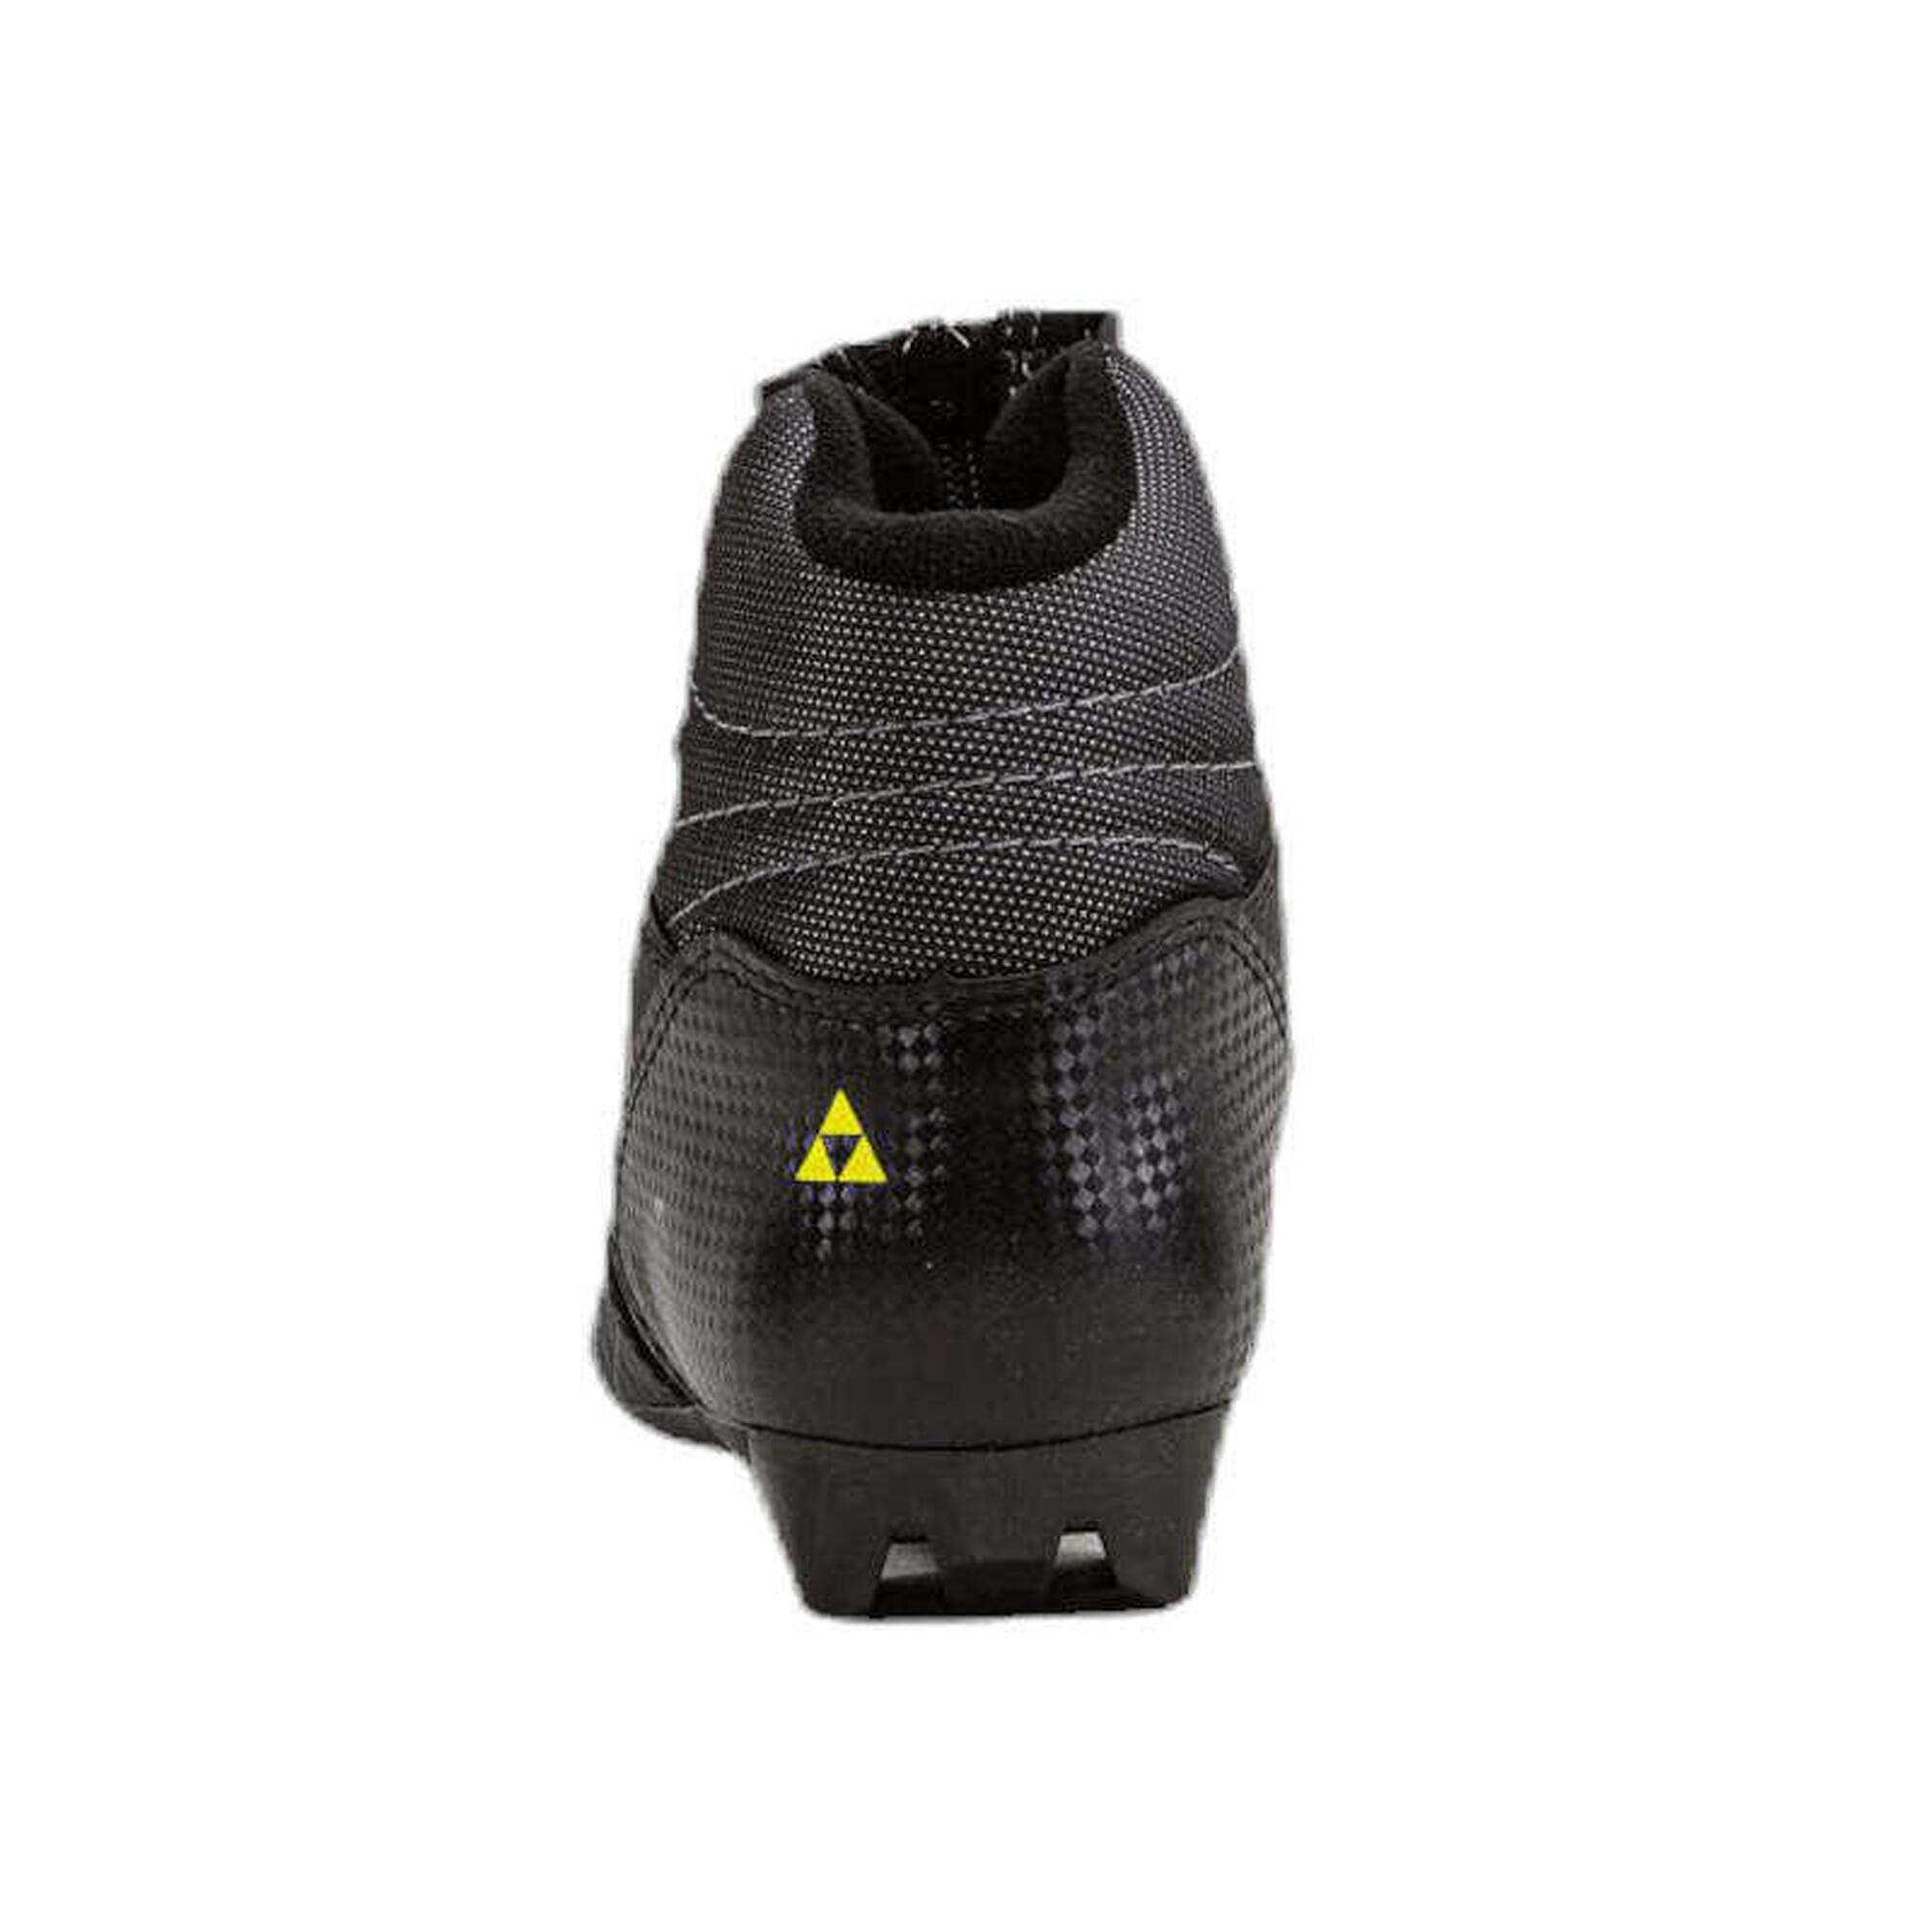 Buty biegowe Fischer XC Pro Black Yellow 2023